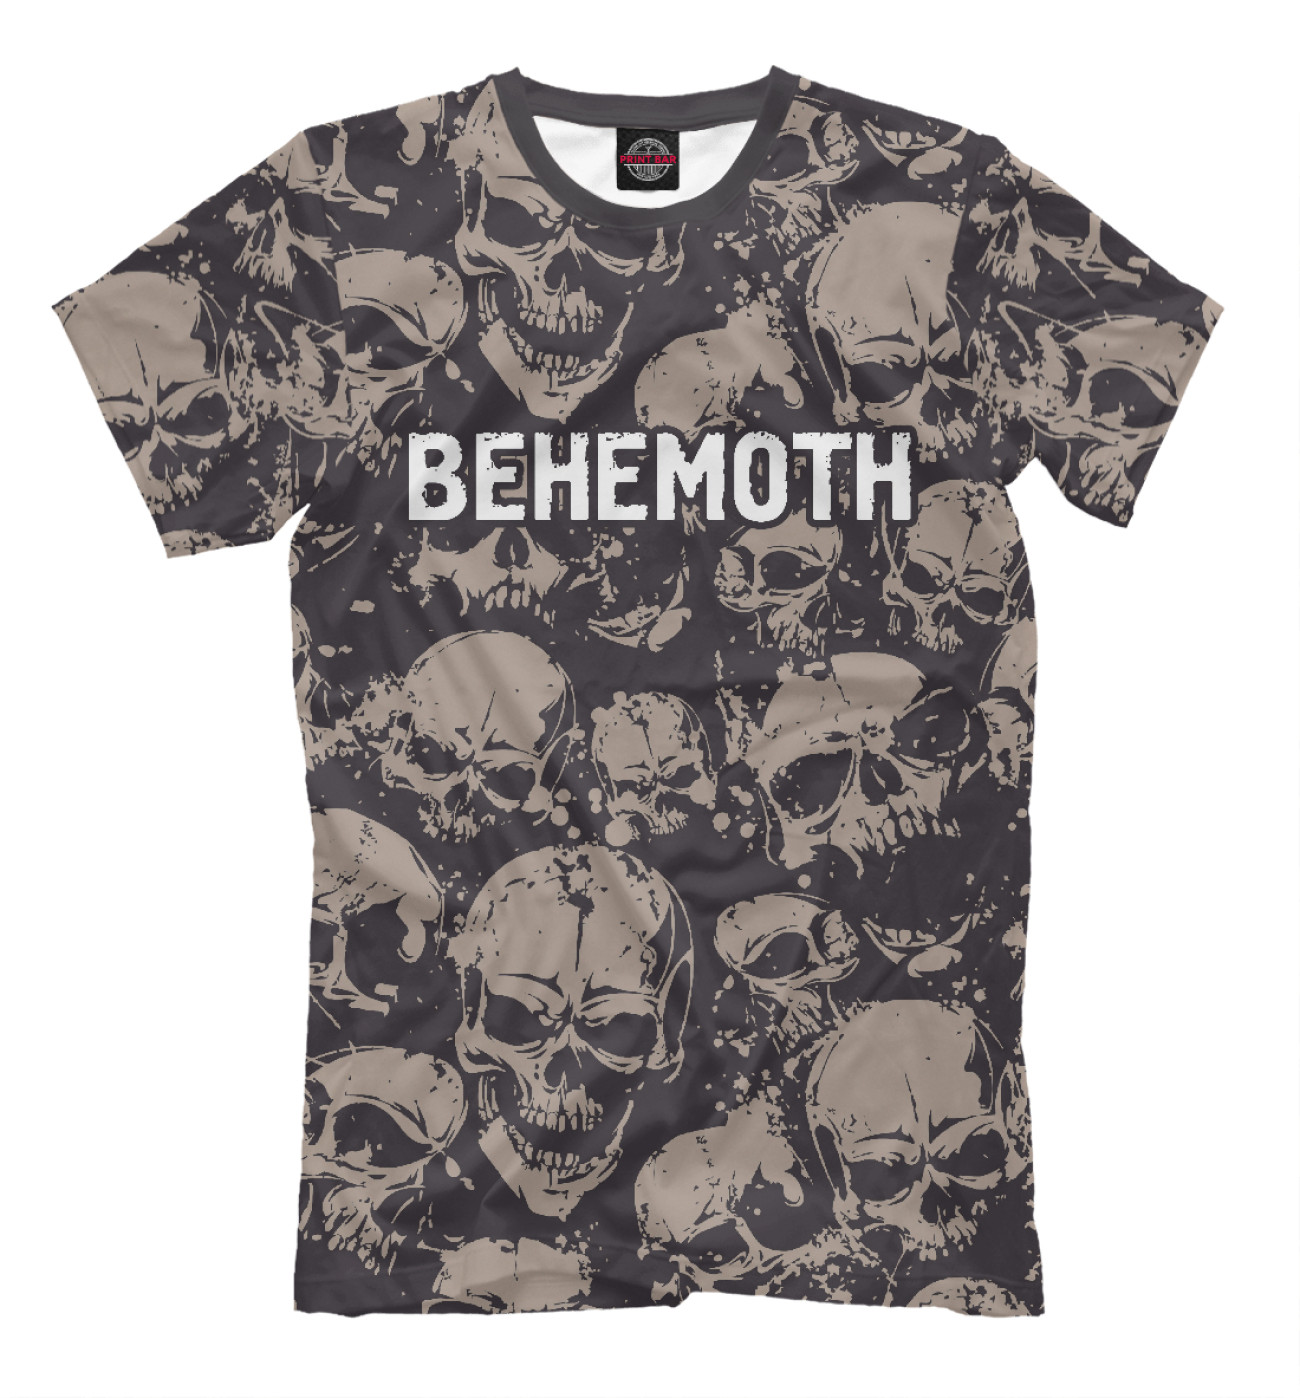 Мужская Футболка Behemoth, артикул: BMT-482539-fut-2